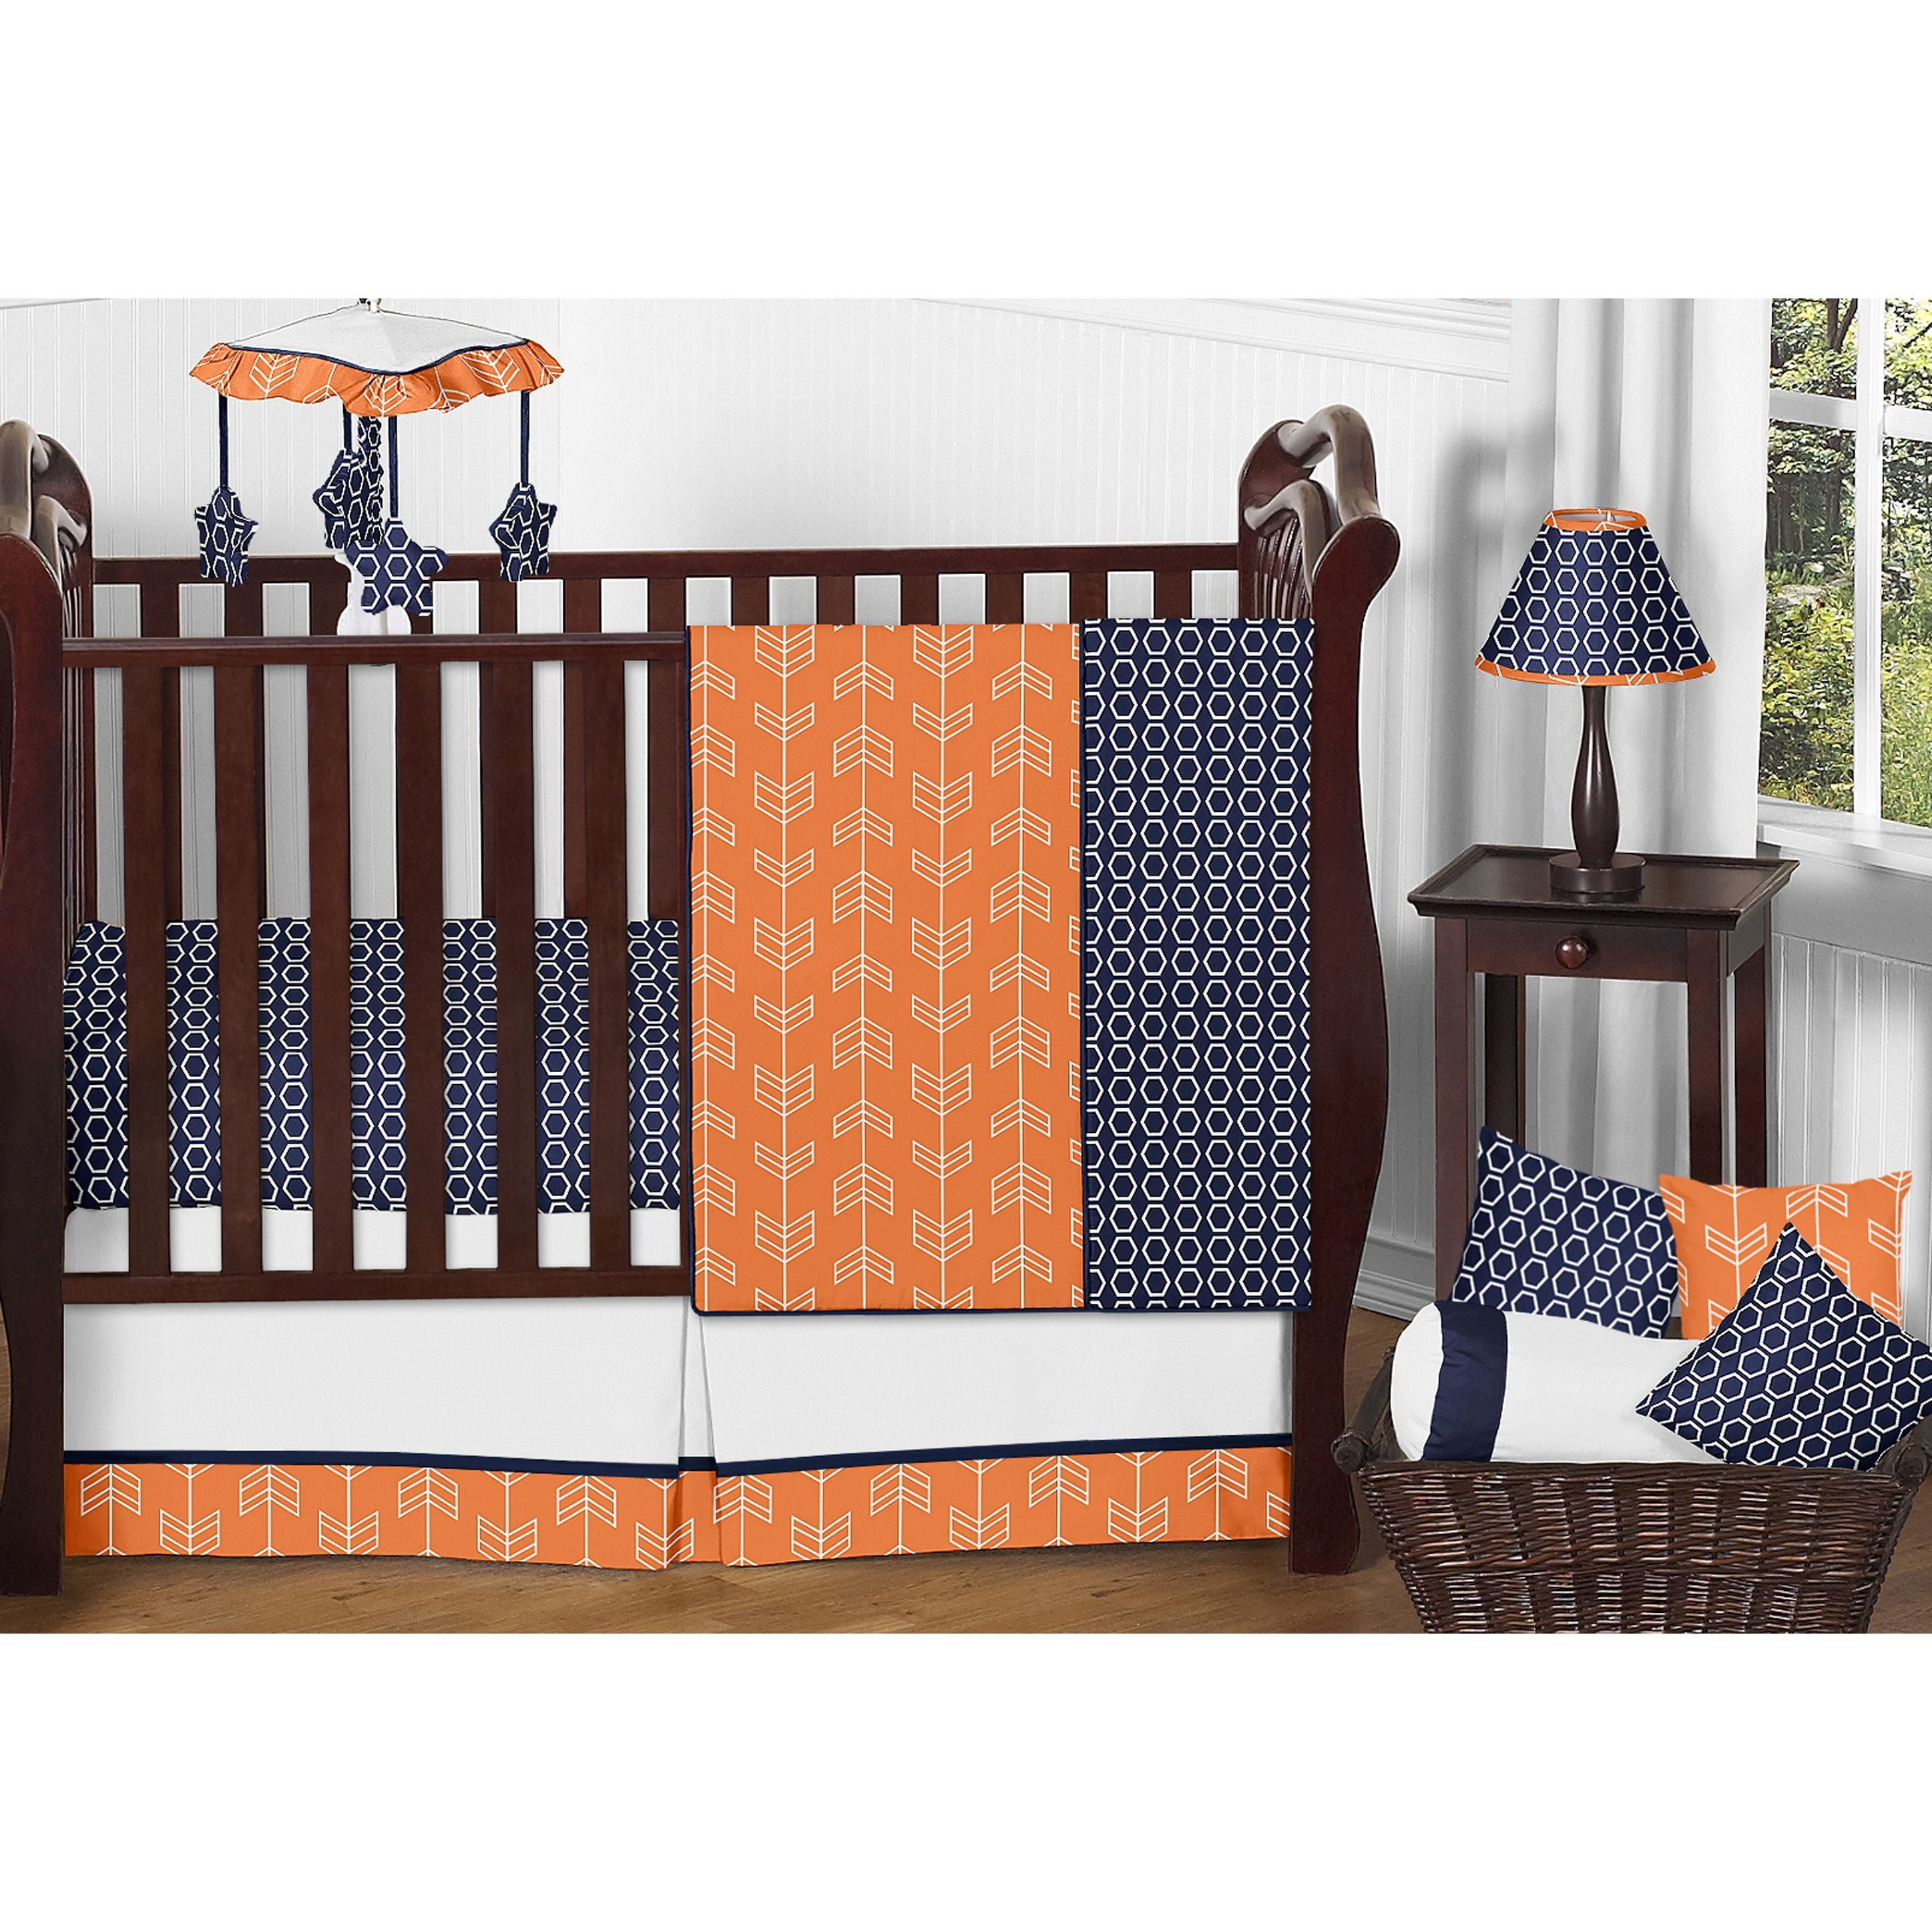 11pc Crib Bedding Set For The Orange And Navy Blue Arrow Collection By Sweet Jojo Designs Walmart Com Walmart Com